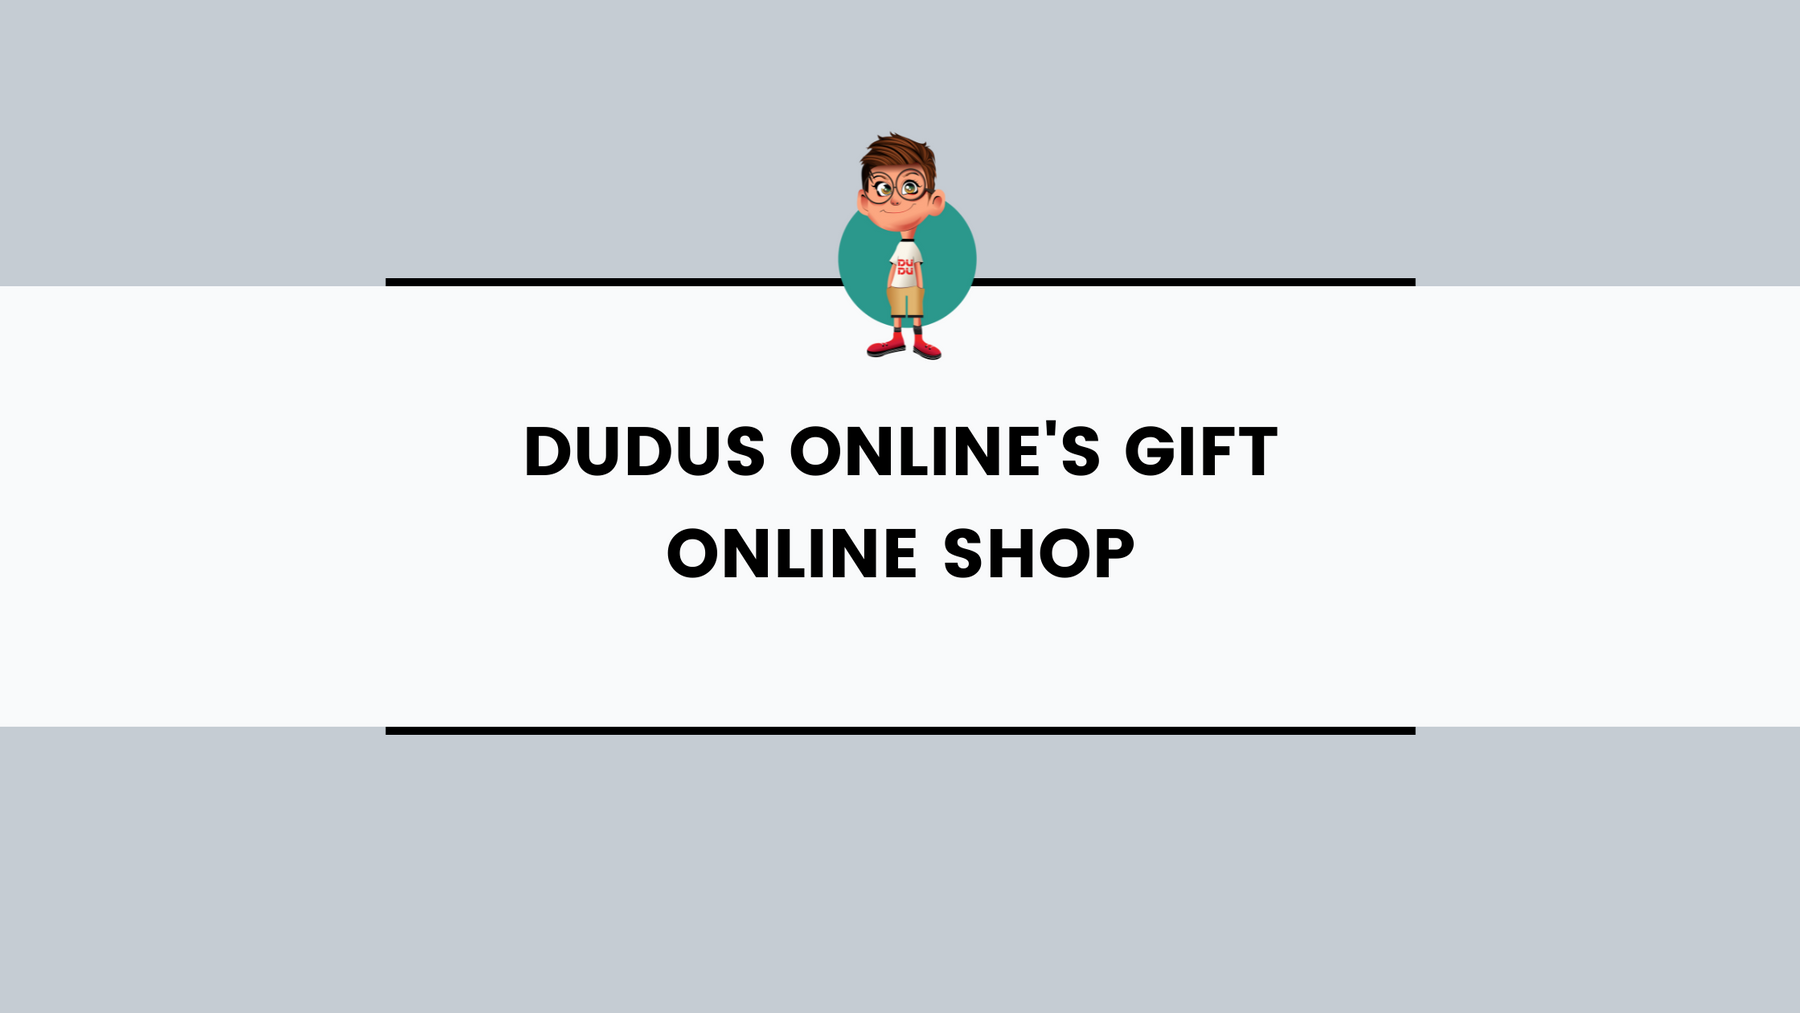 Dudus Online's gift online shop